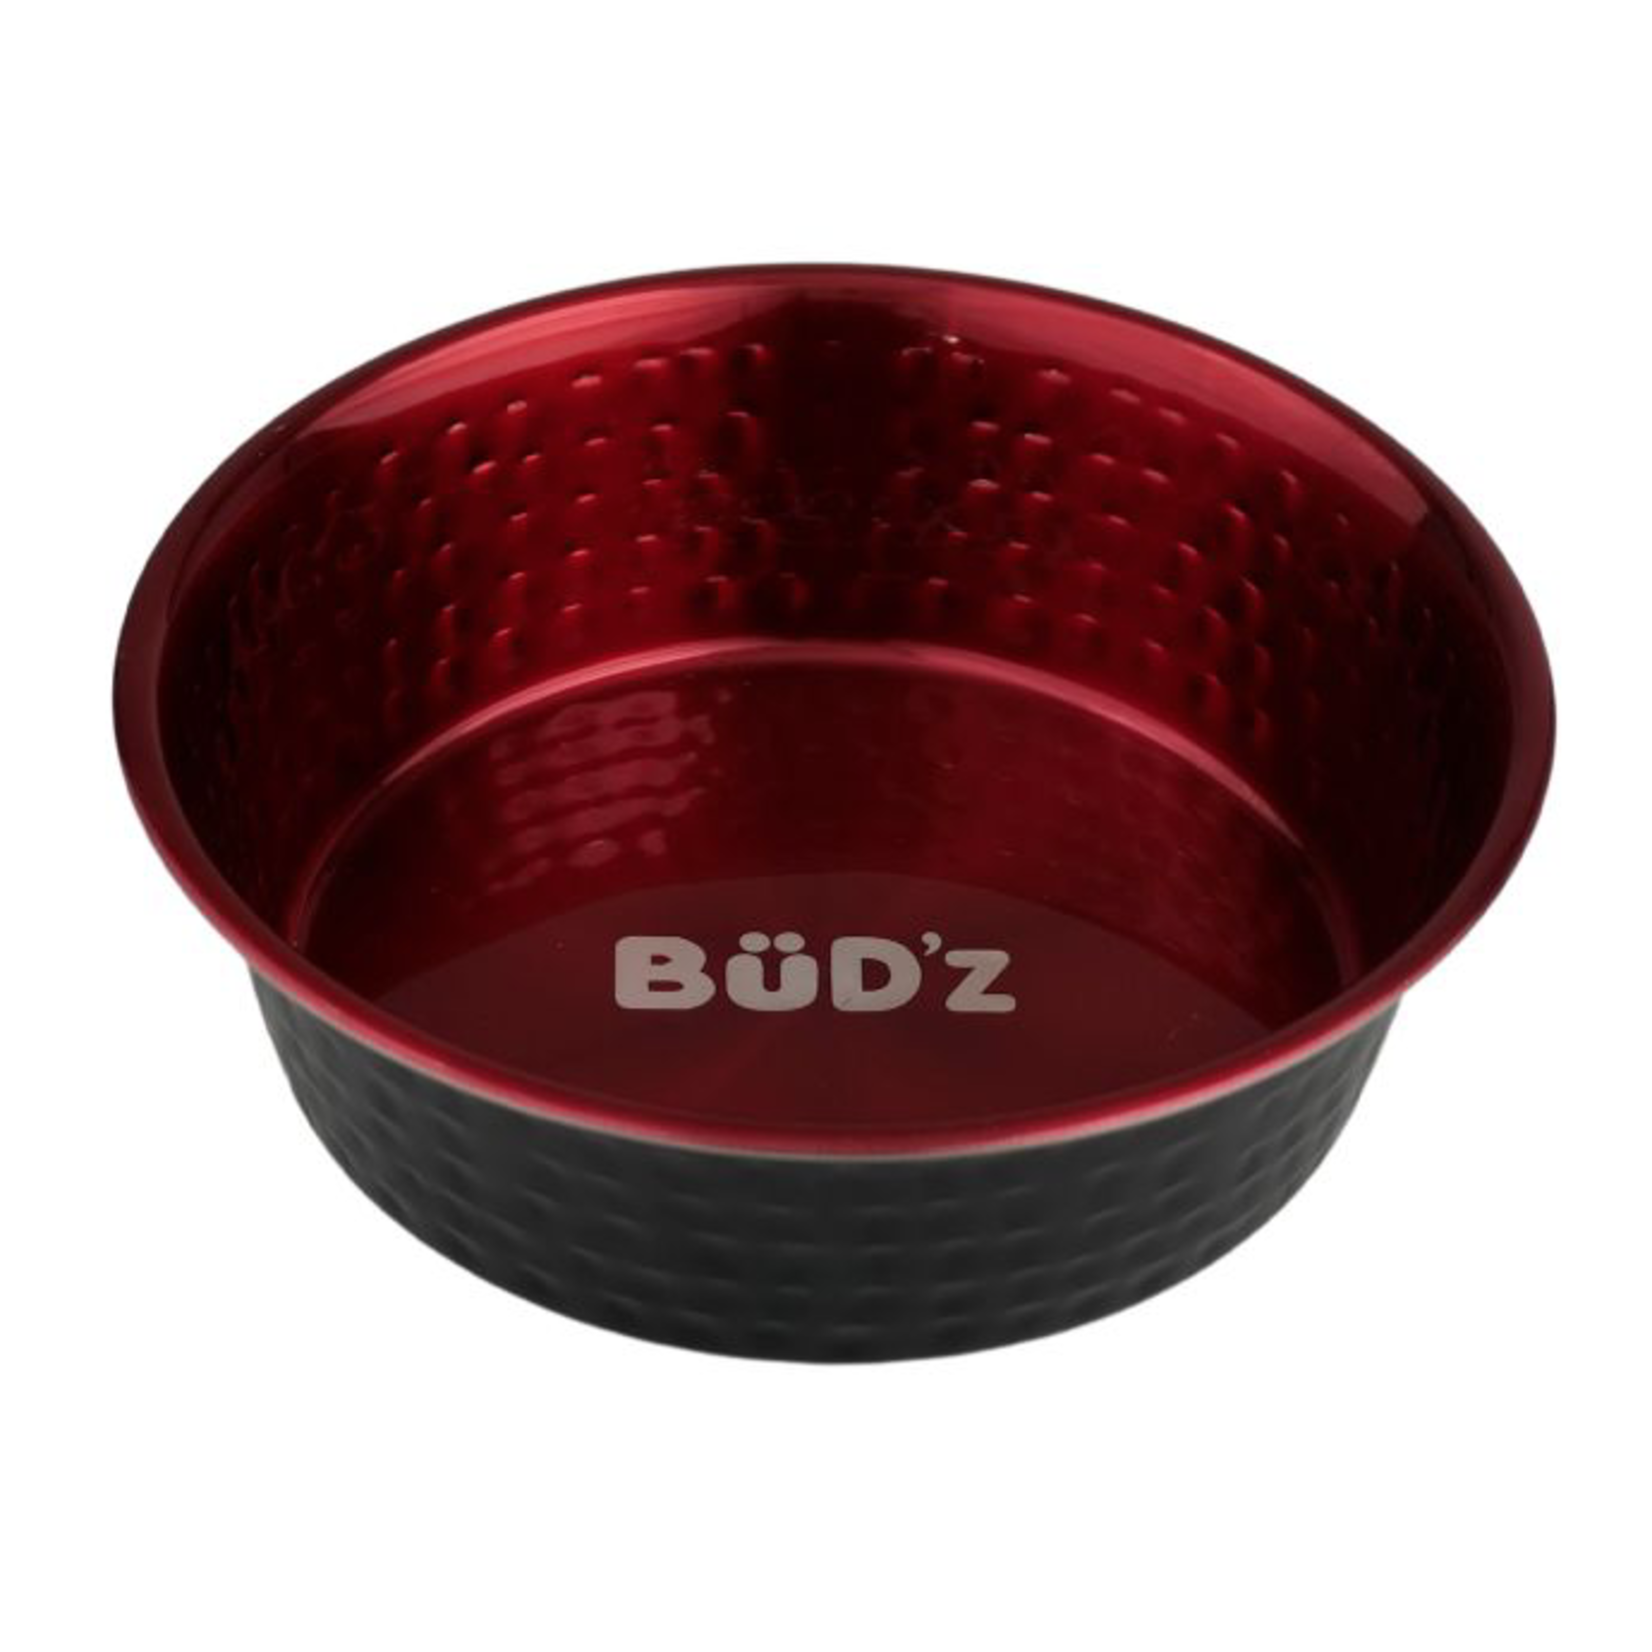 BUD-Z BUD'Z STAINLESS STEEL BOWL, HAMMERED INTERIOR - RED 1900ml (64oz)